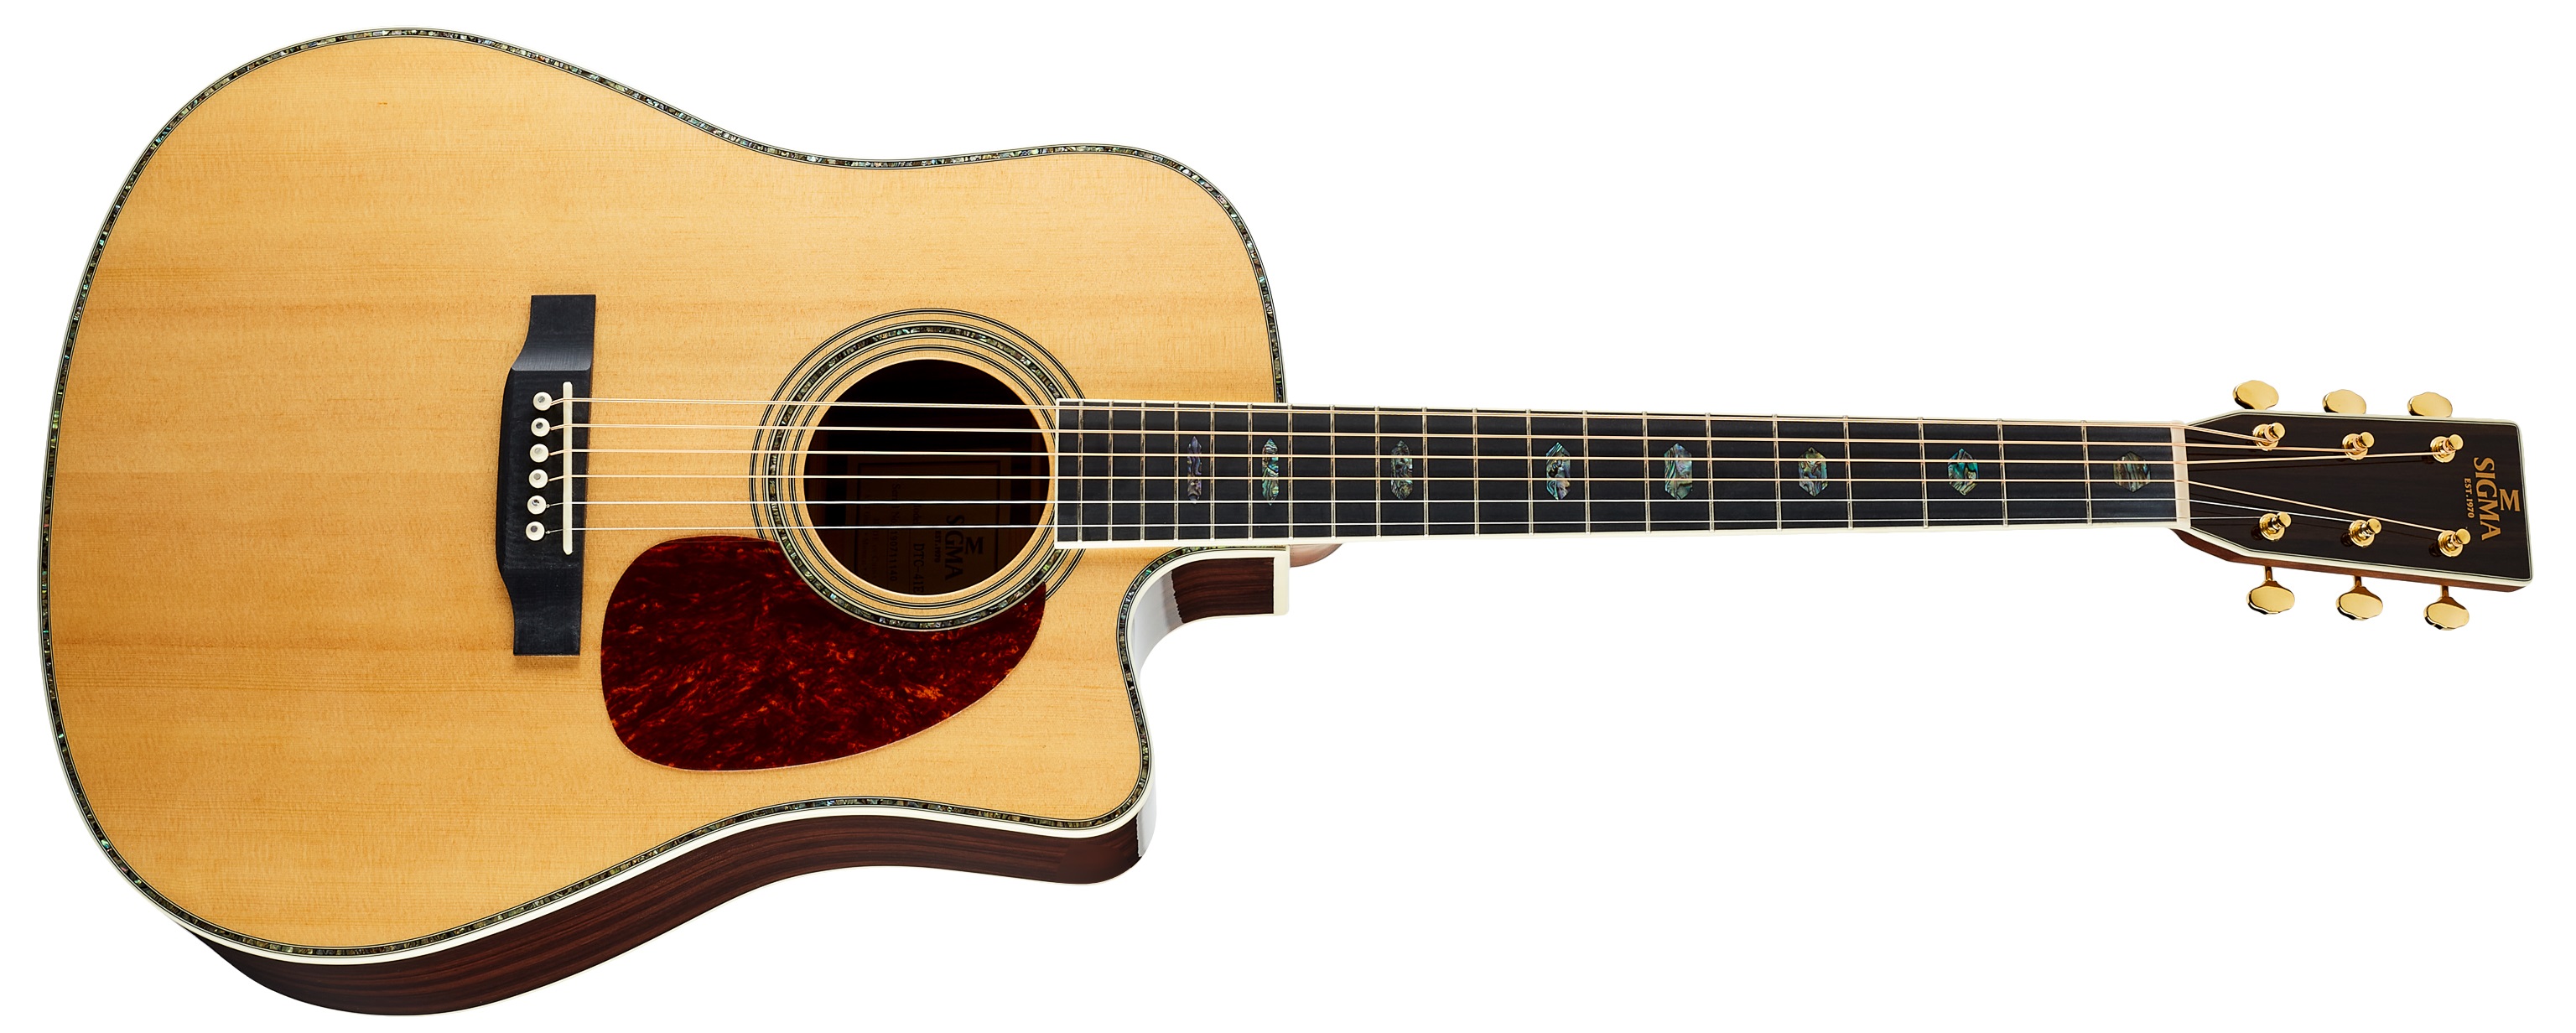 Sigma Guitars DTC-41E